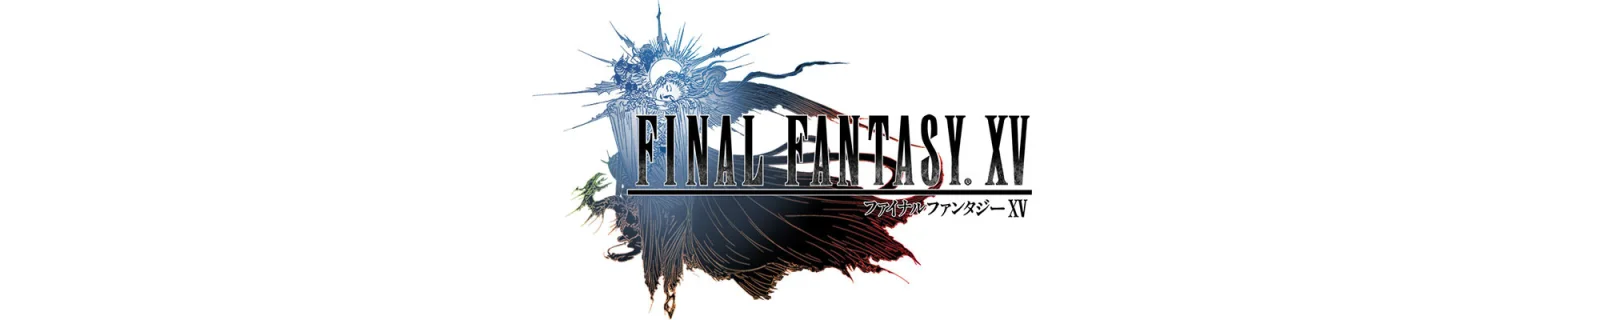 E3微软发布会《最终幻想15》公布新战斗演示